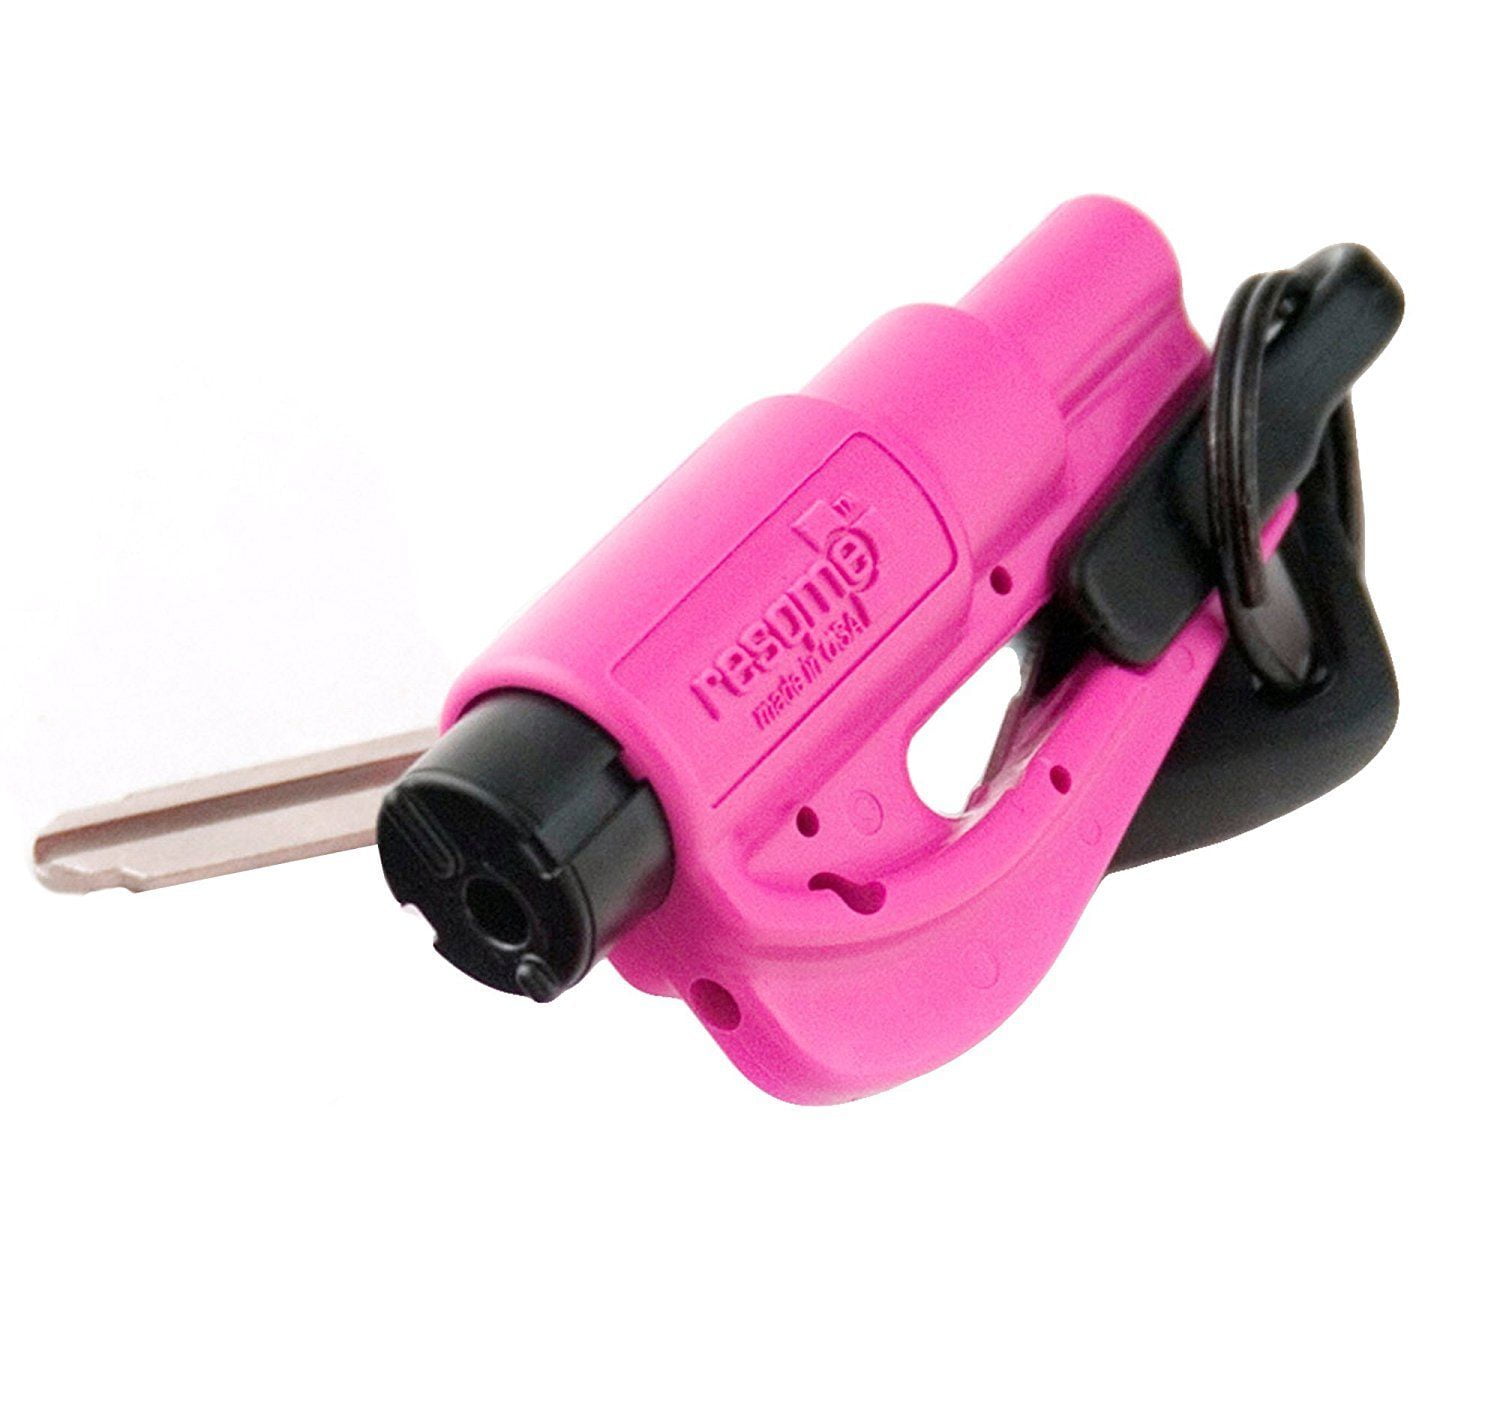 ResQMe ResQMe Keychain Tool, pink